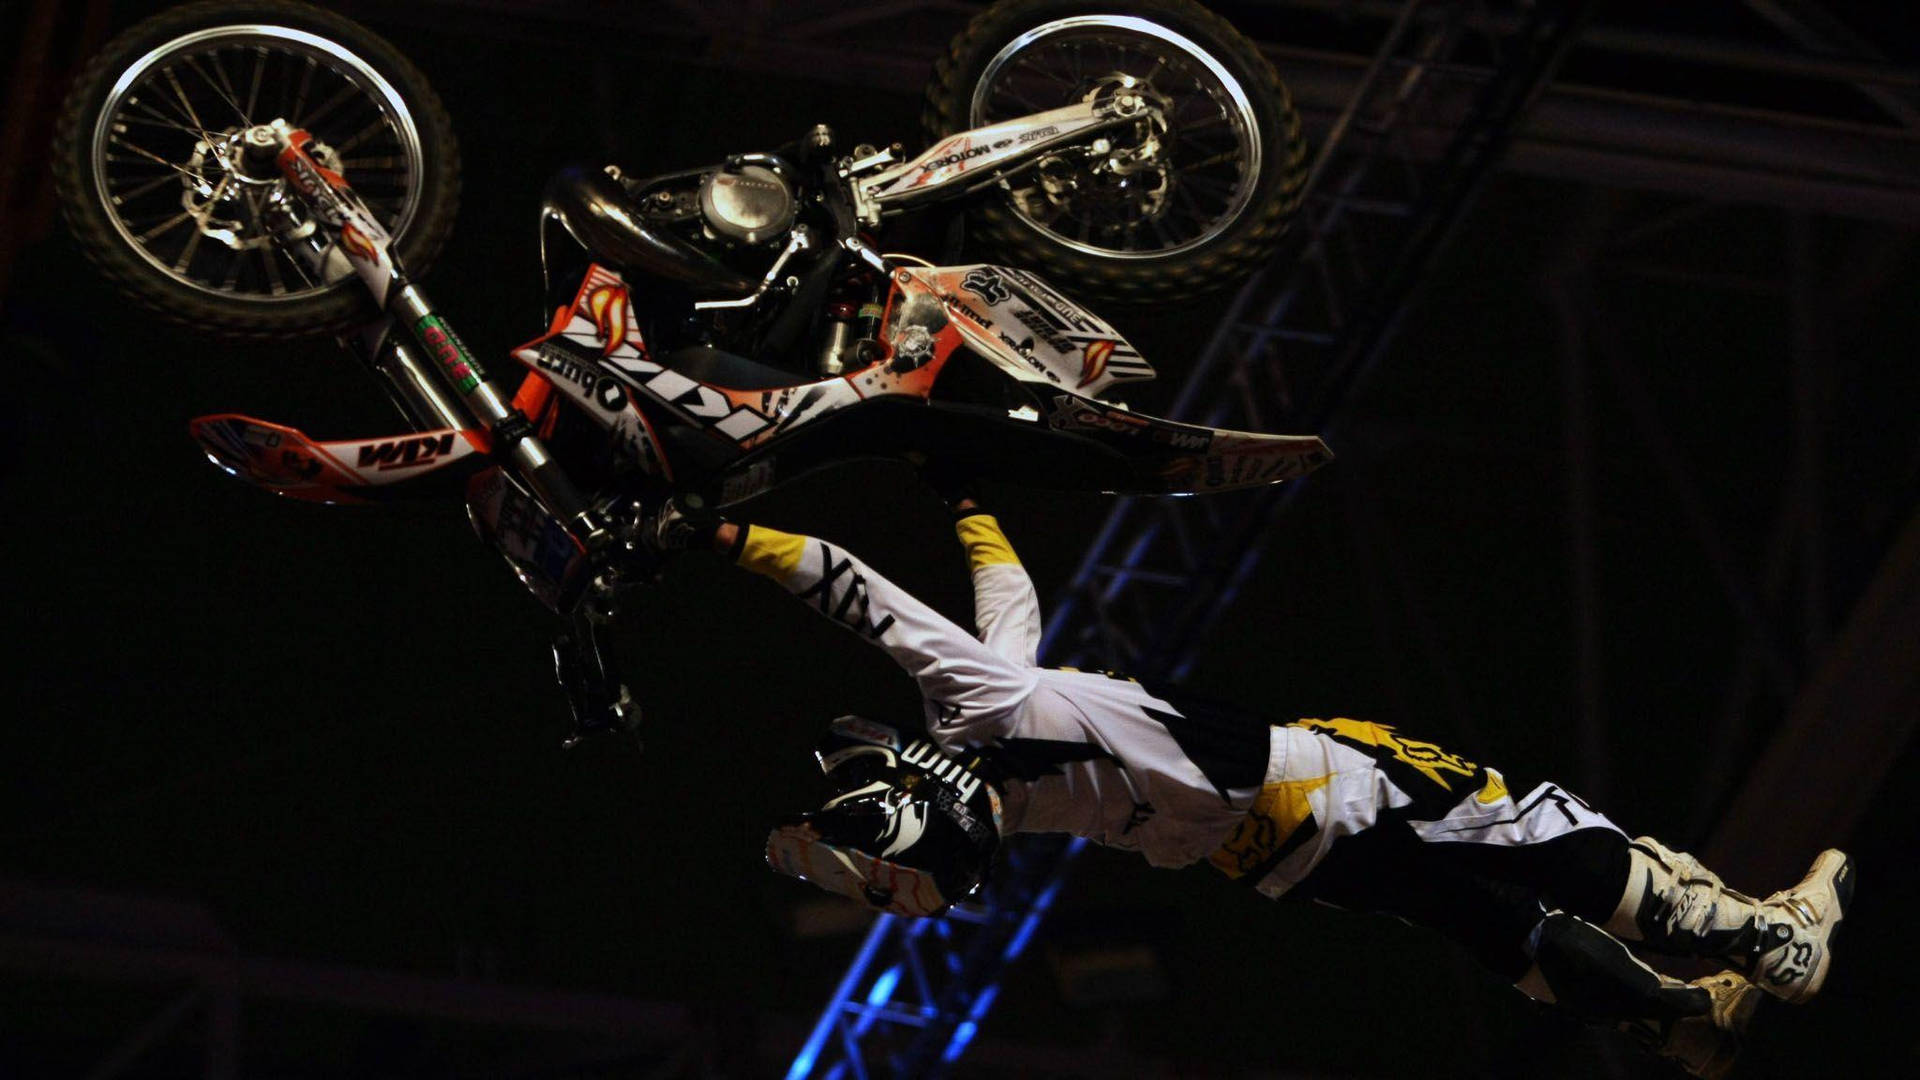 X Games Motocross Aerial Stunt Background